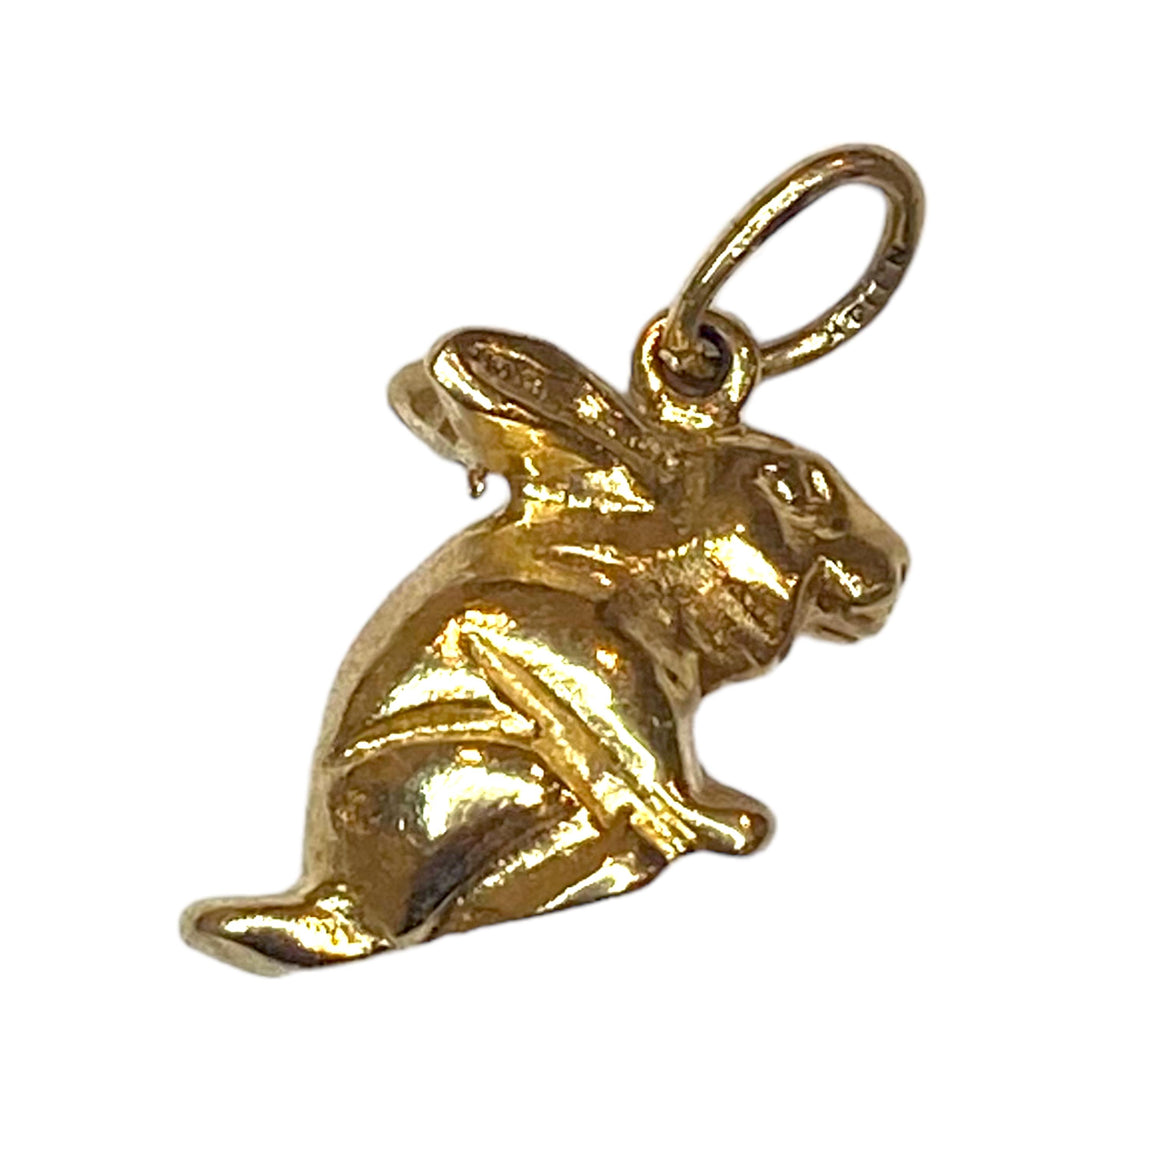 Vintage 14K Gold Rabbit Charm Pendant